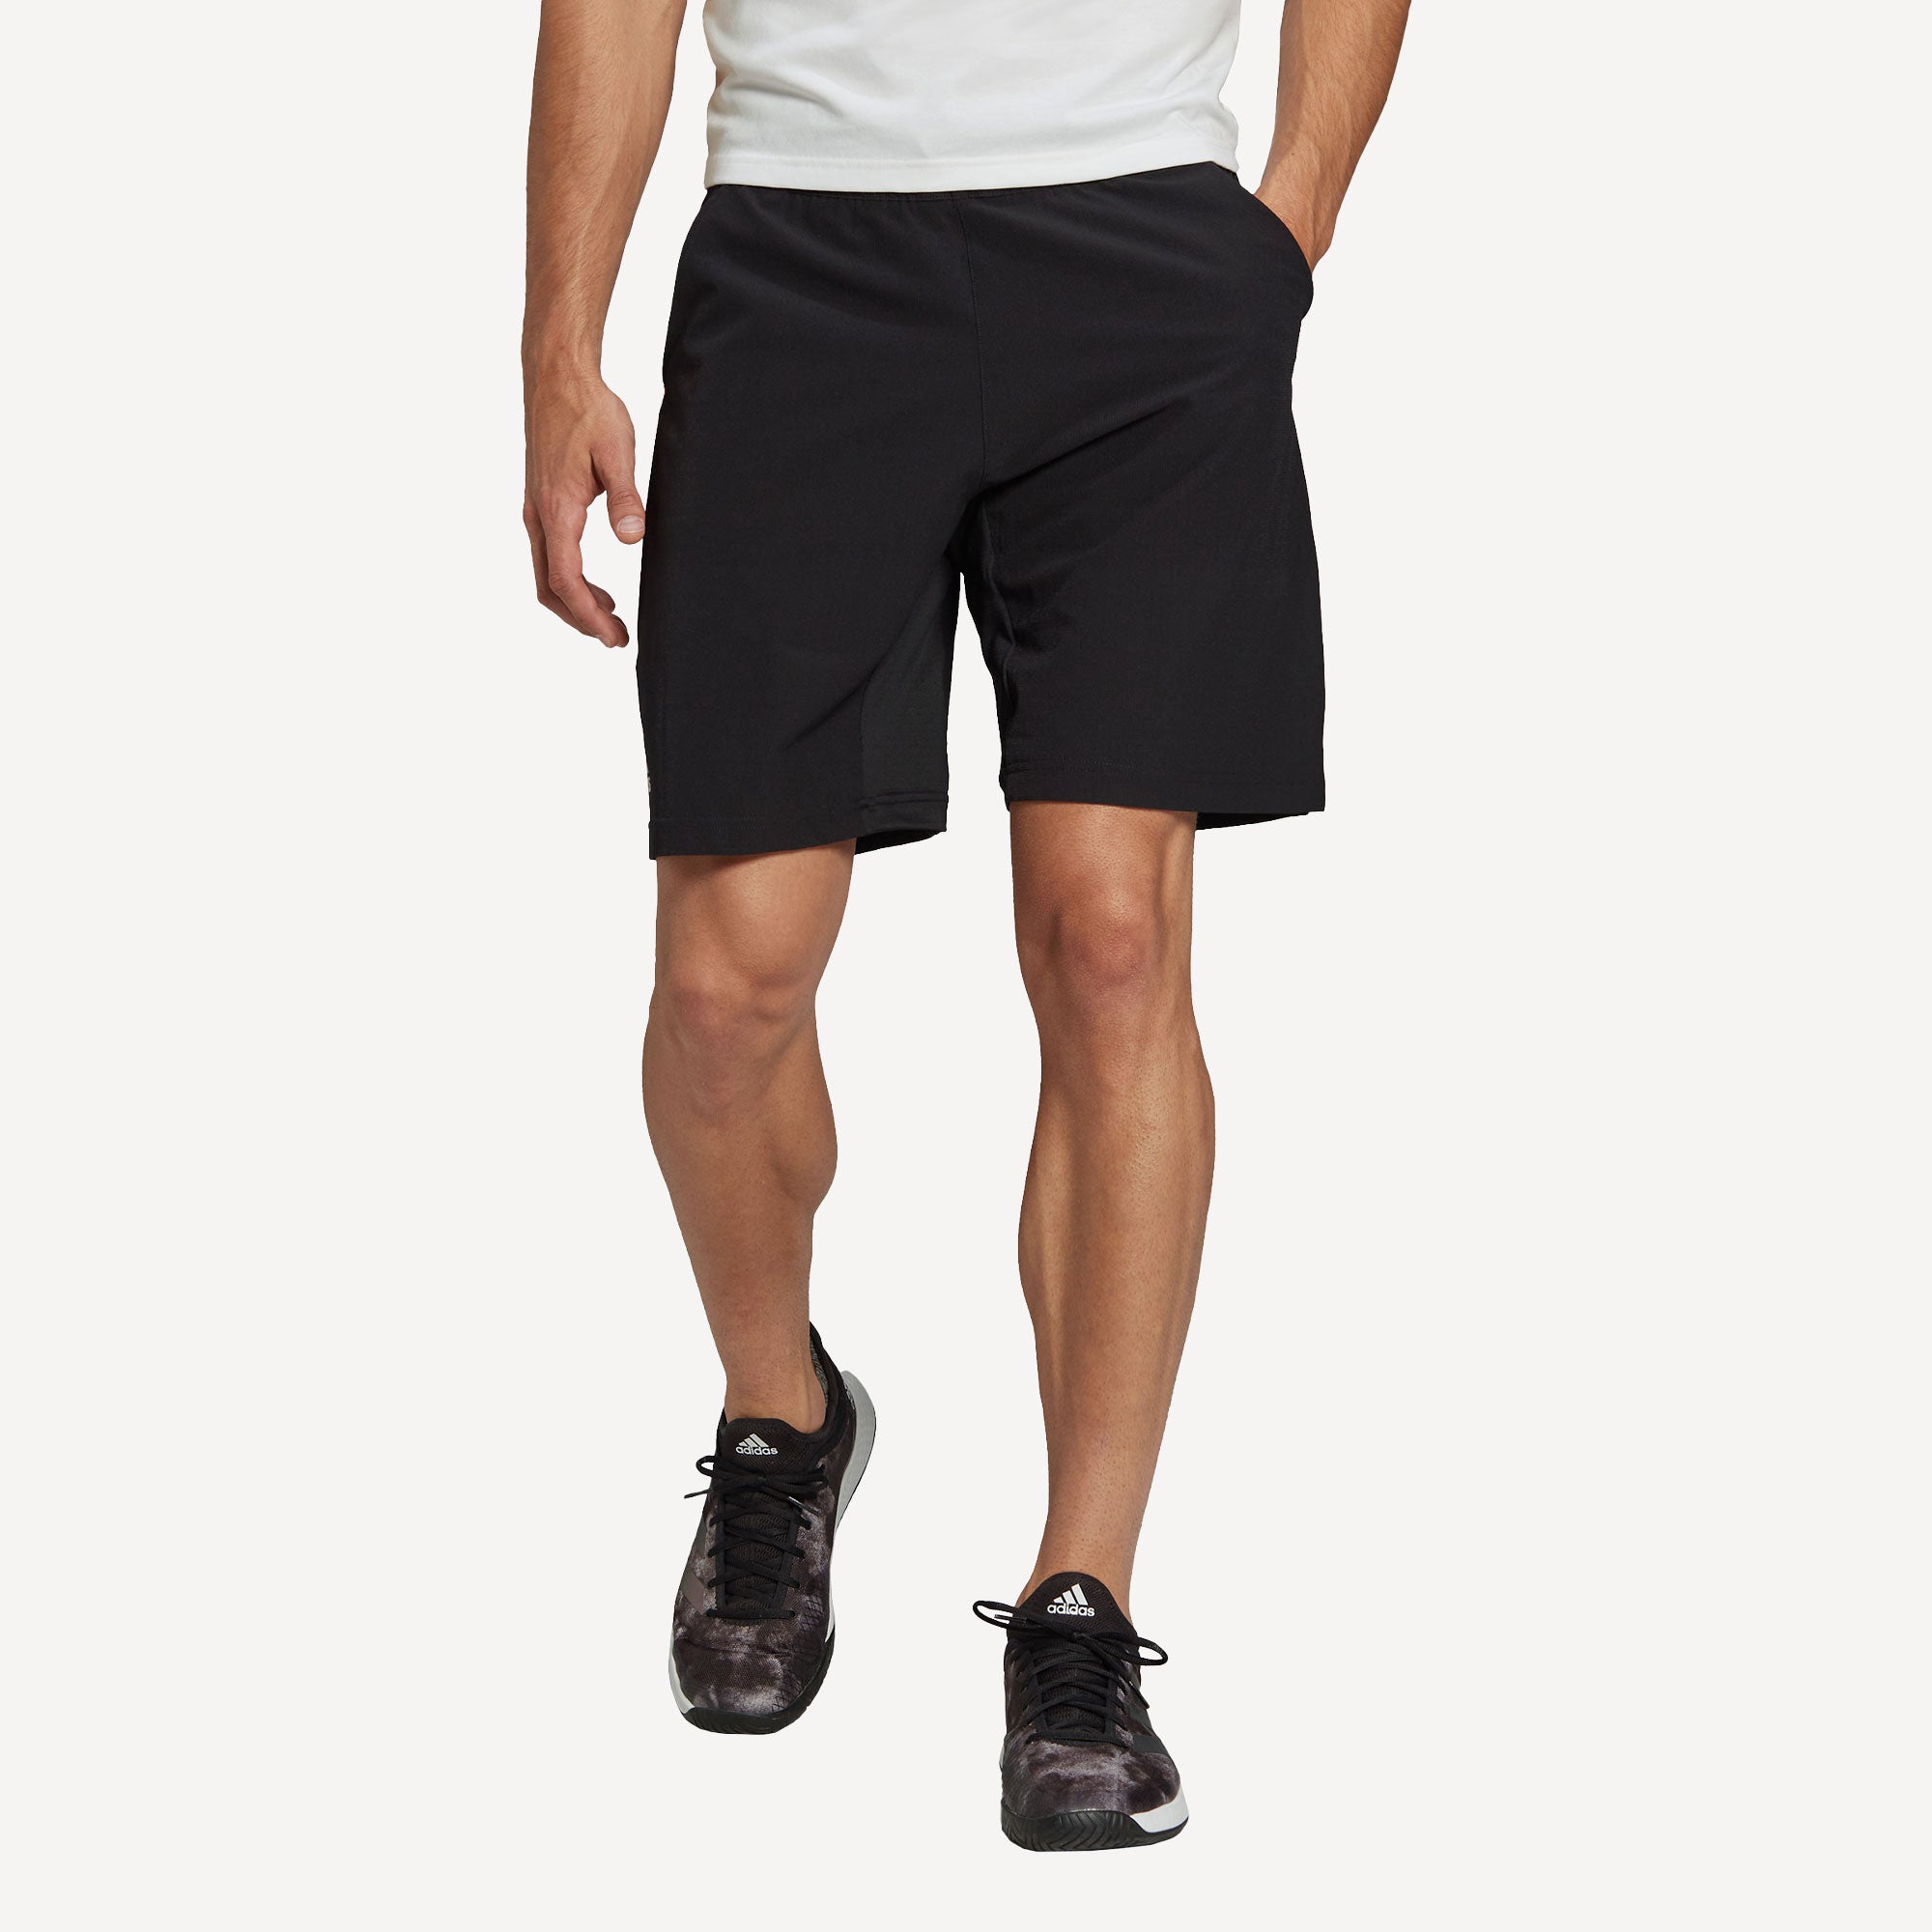 adidas Ergo Men's 9-Inch Tennis Shorts Black (1)